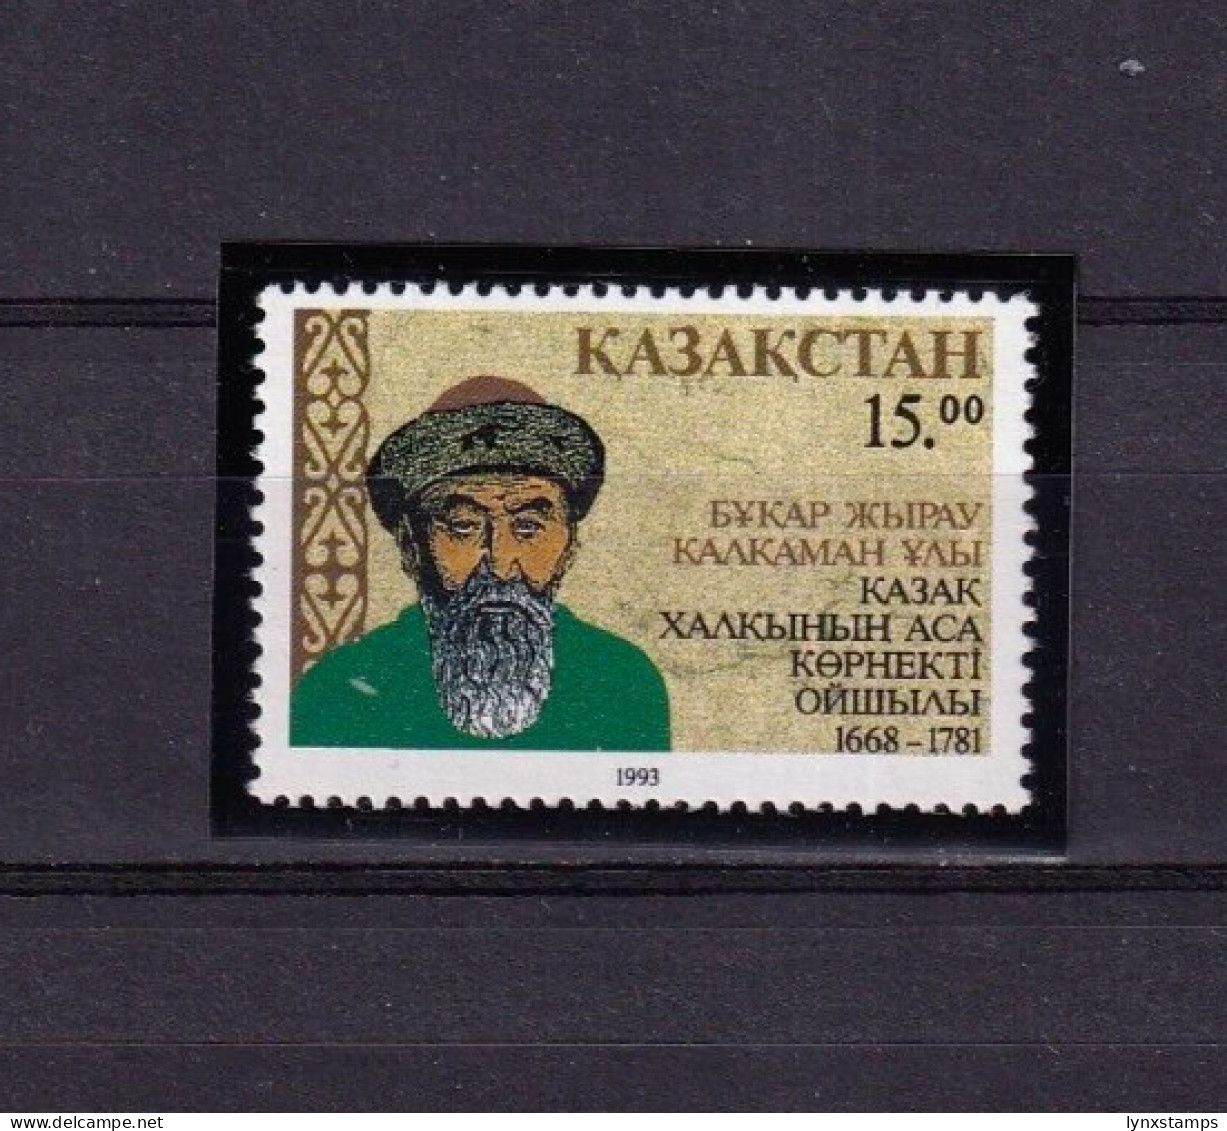 SA01 Kazahstan 1993 The 325th Anniversary Of The Birth Of Bukar Zhyrau Kalkaman - Kazakhstan